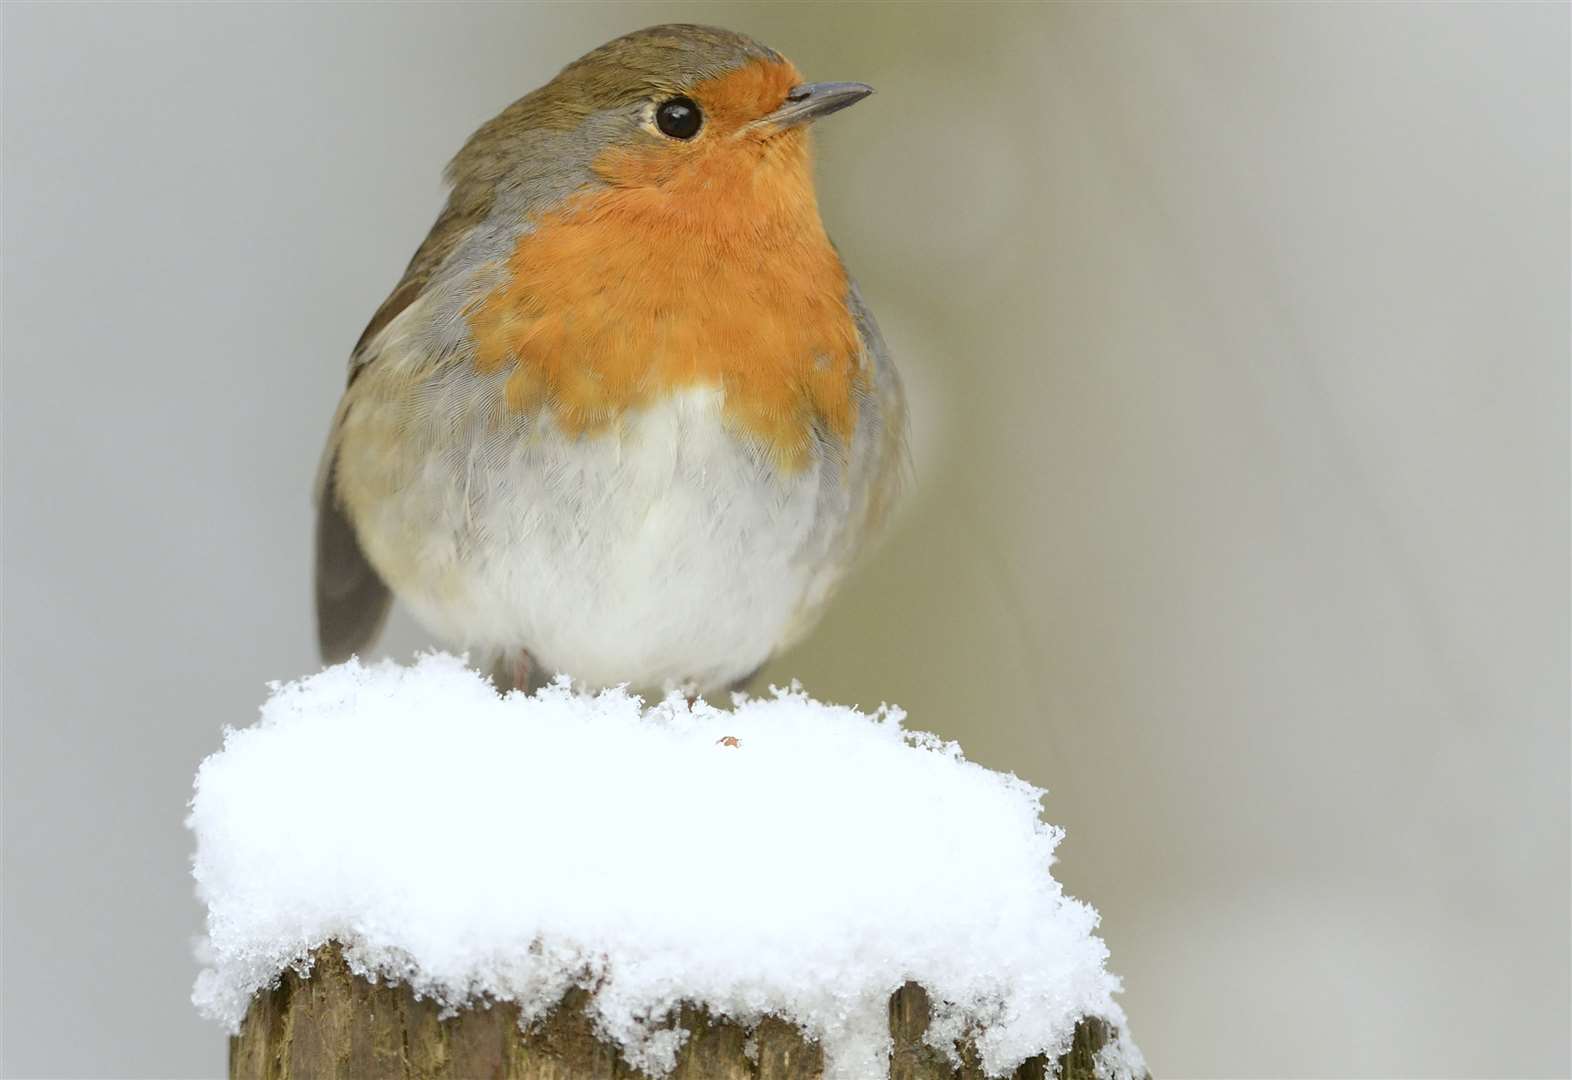 RSPB give tips on feeding birds in winter